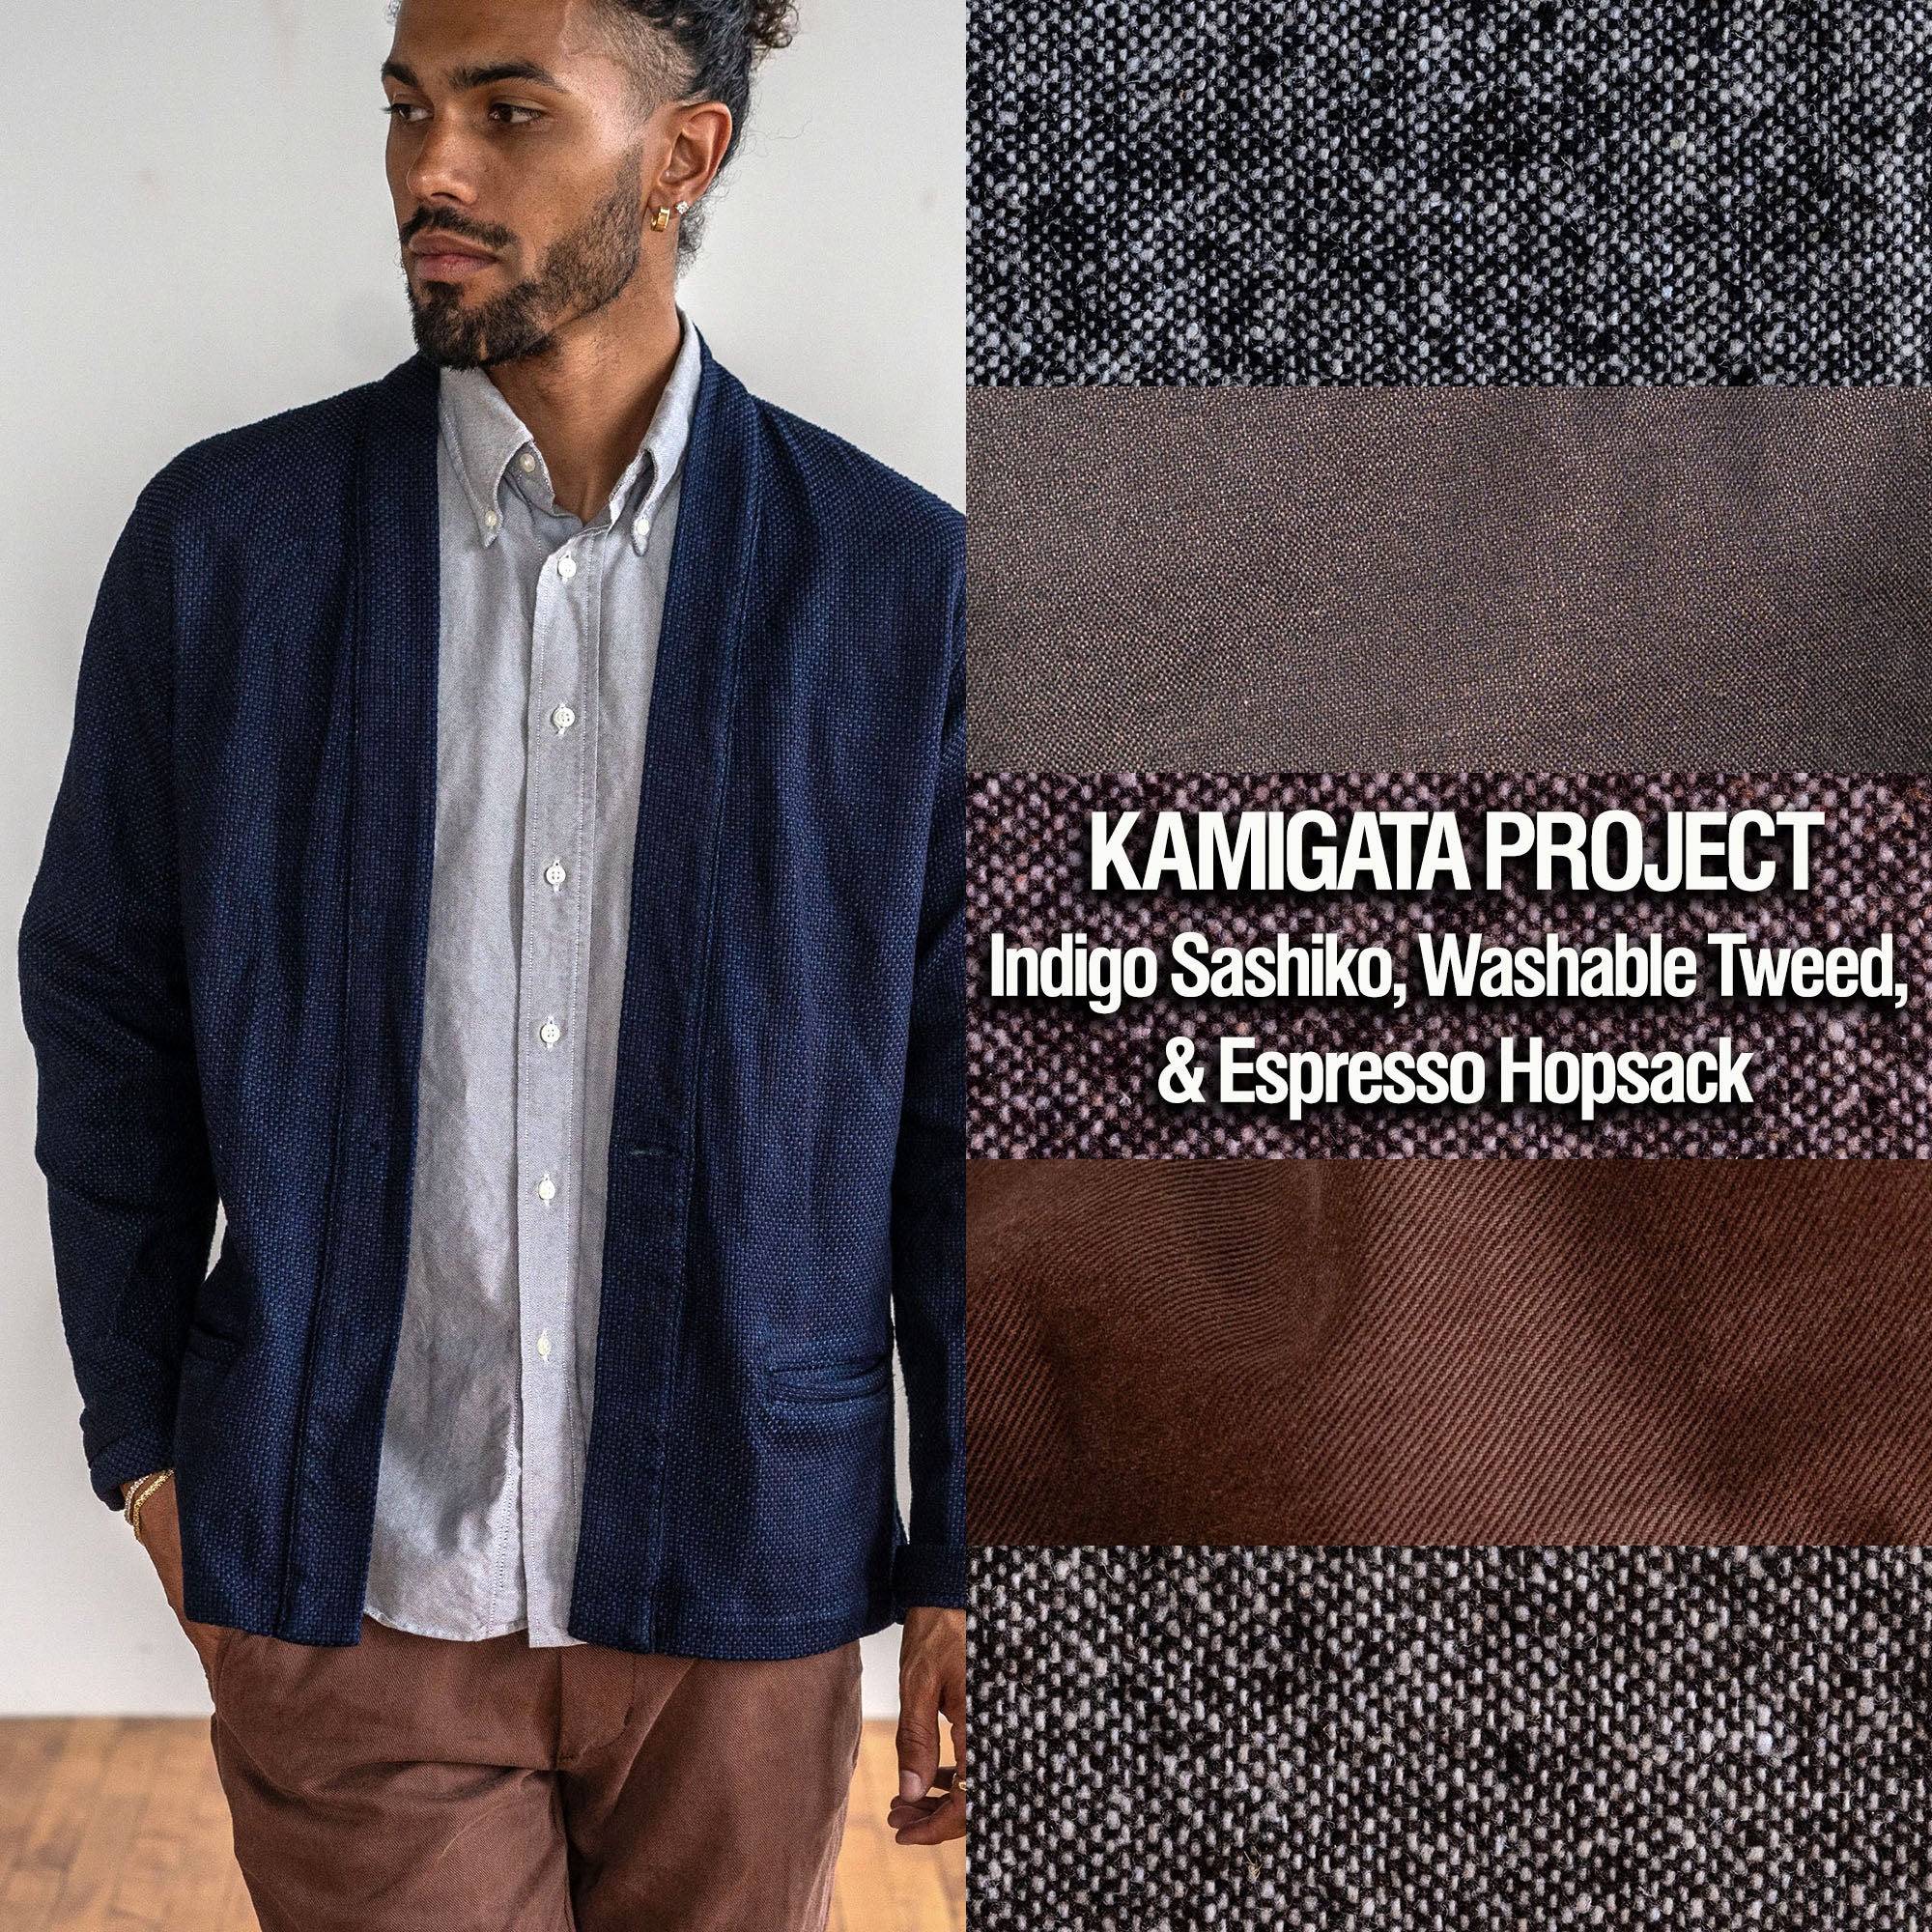 Kamigata Project: Indigo Sashiko, Washable Tweed, Espresso Hopsack